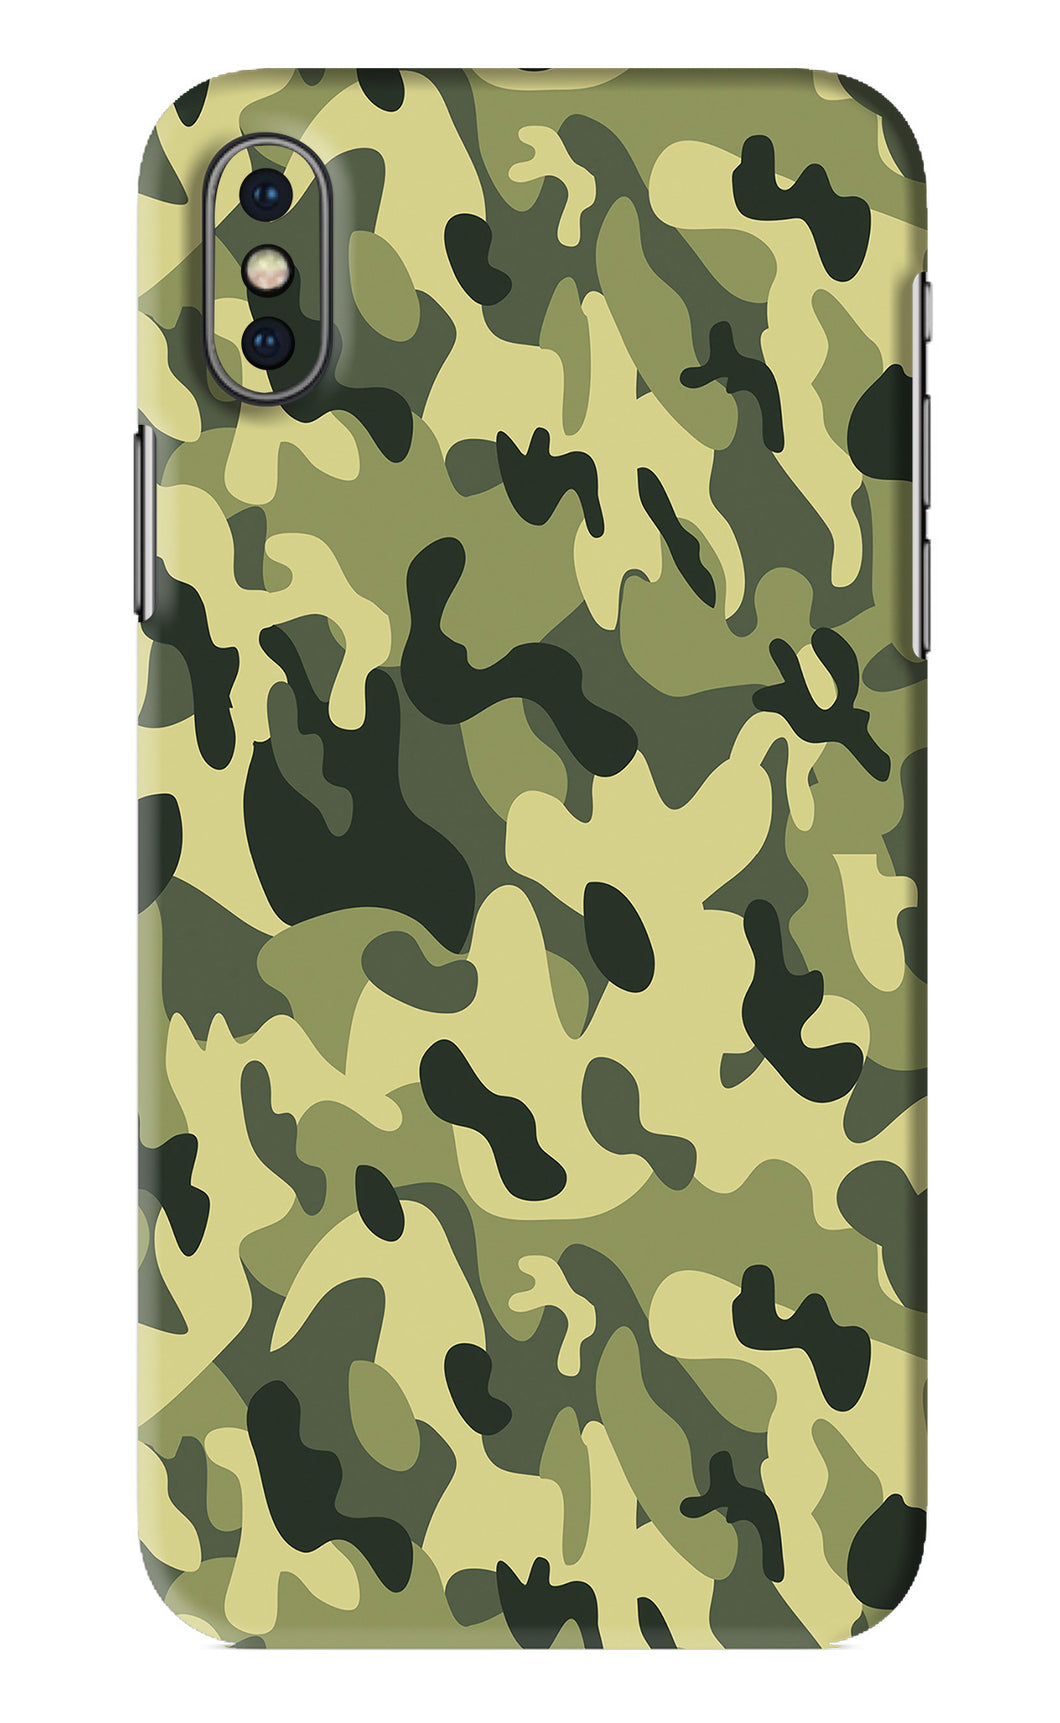 Camouflage iPhone XS Back Skin Wrap